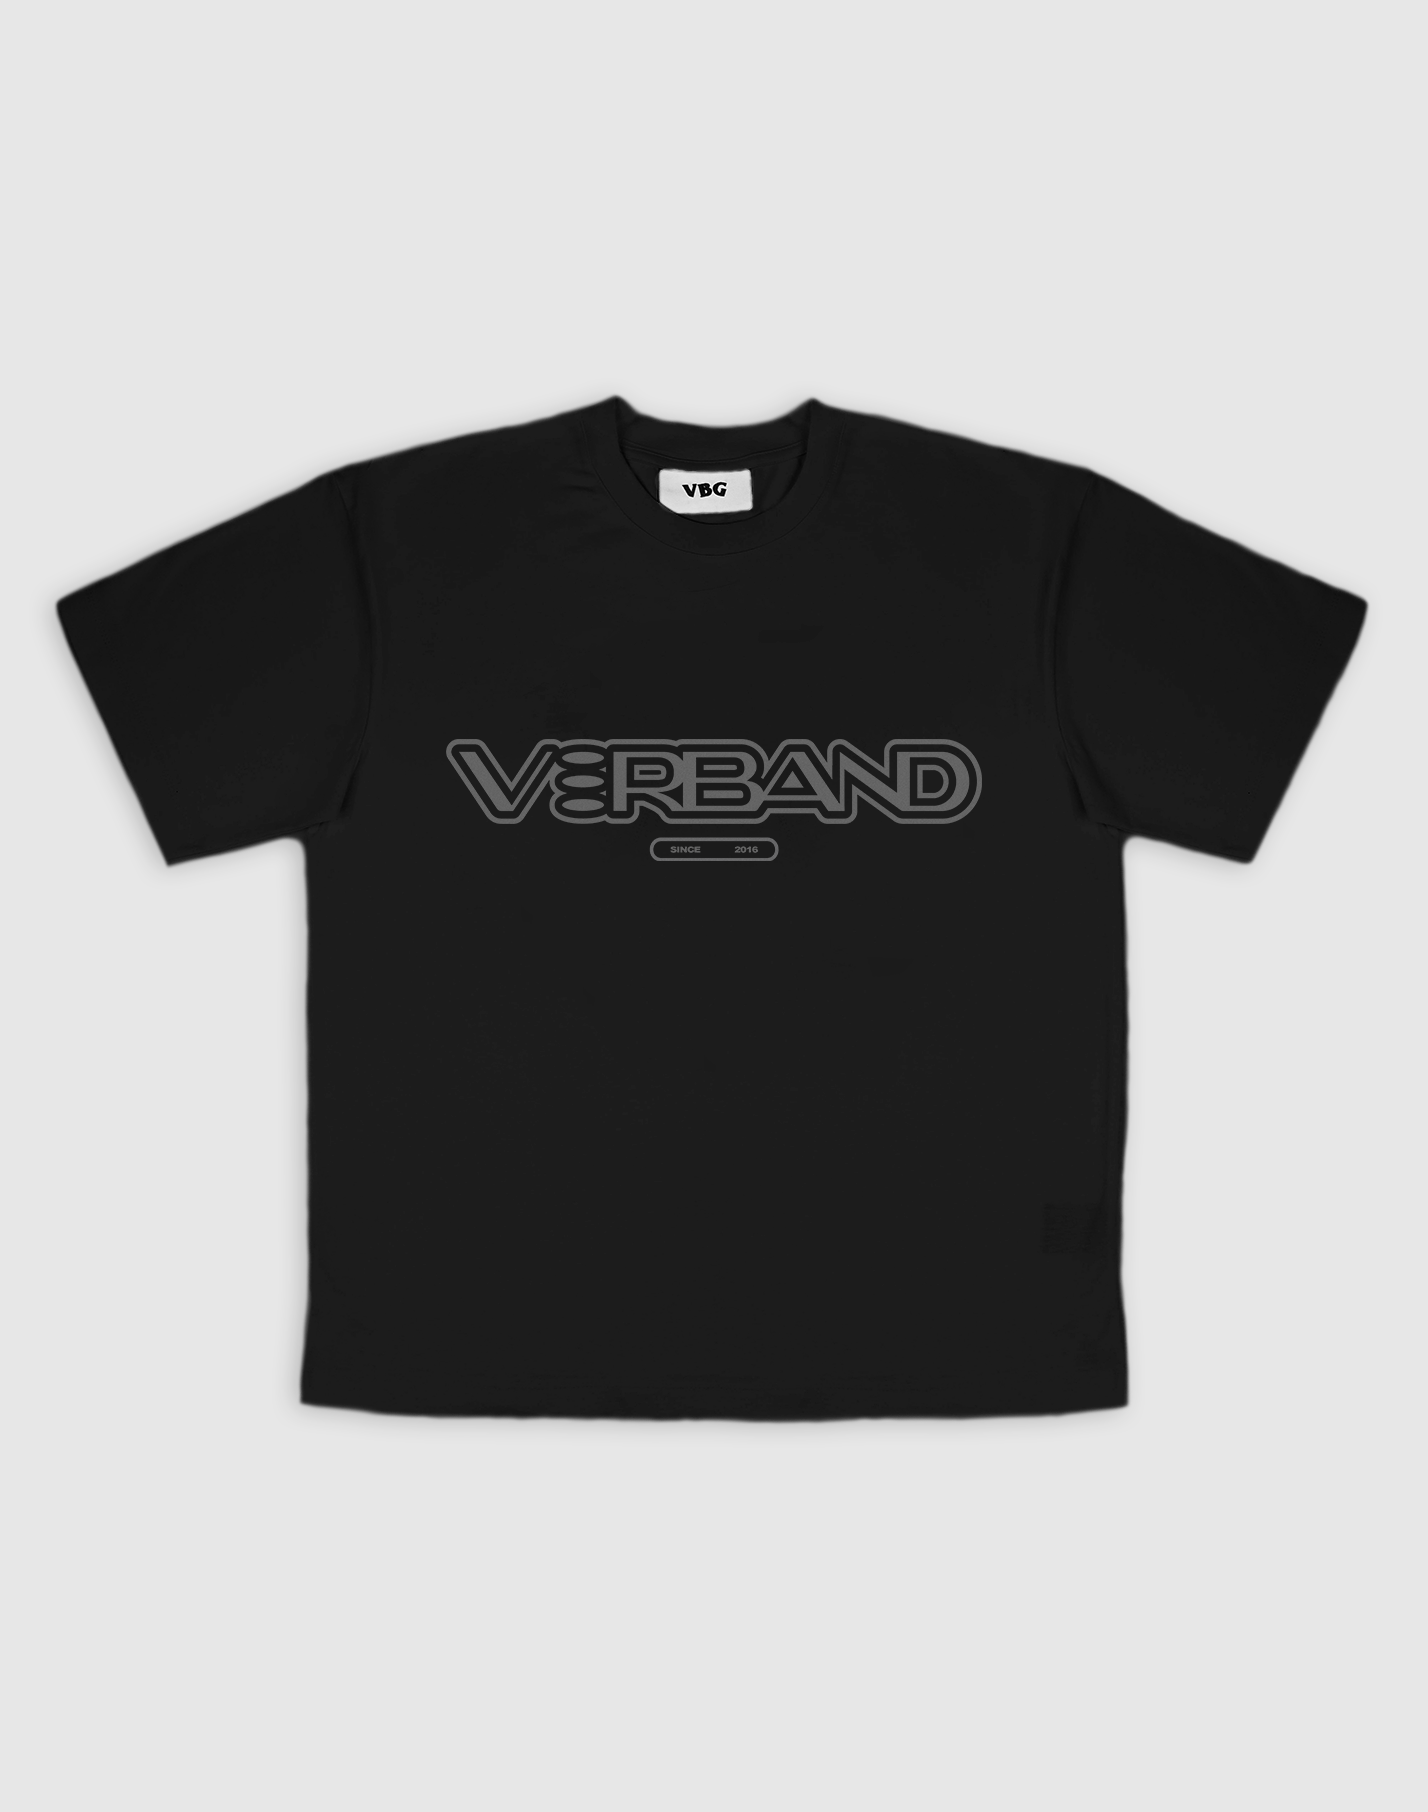 Monochrome Logo T-Shirt - VBG